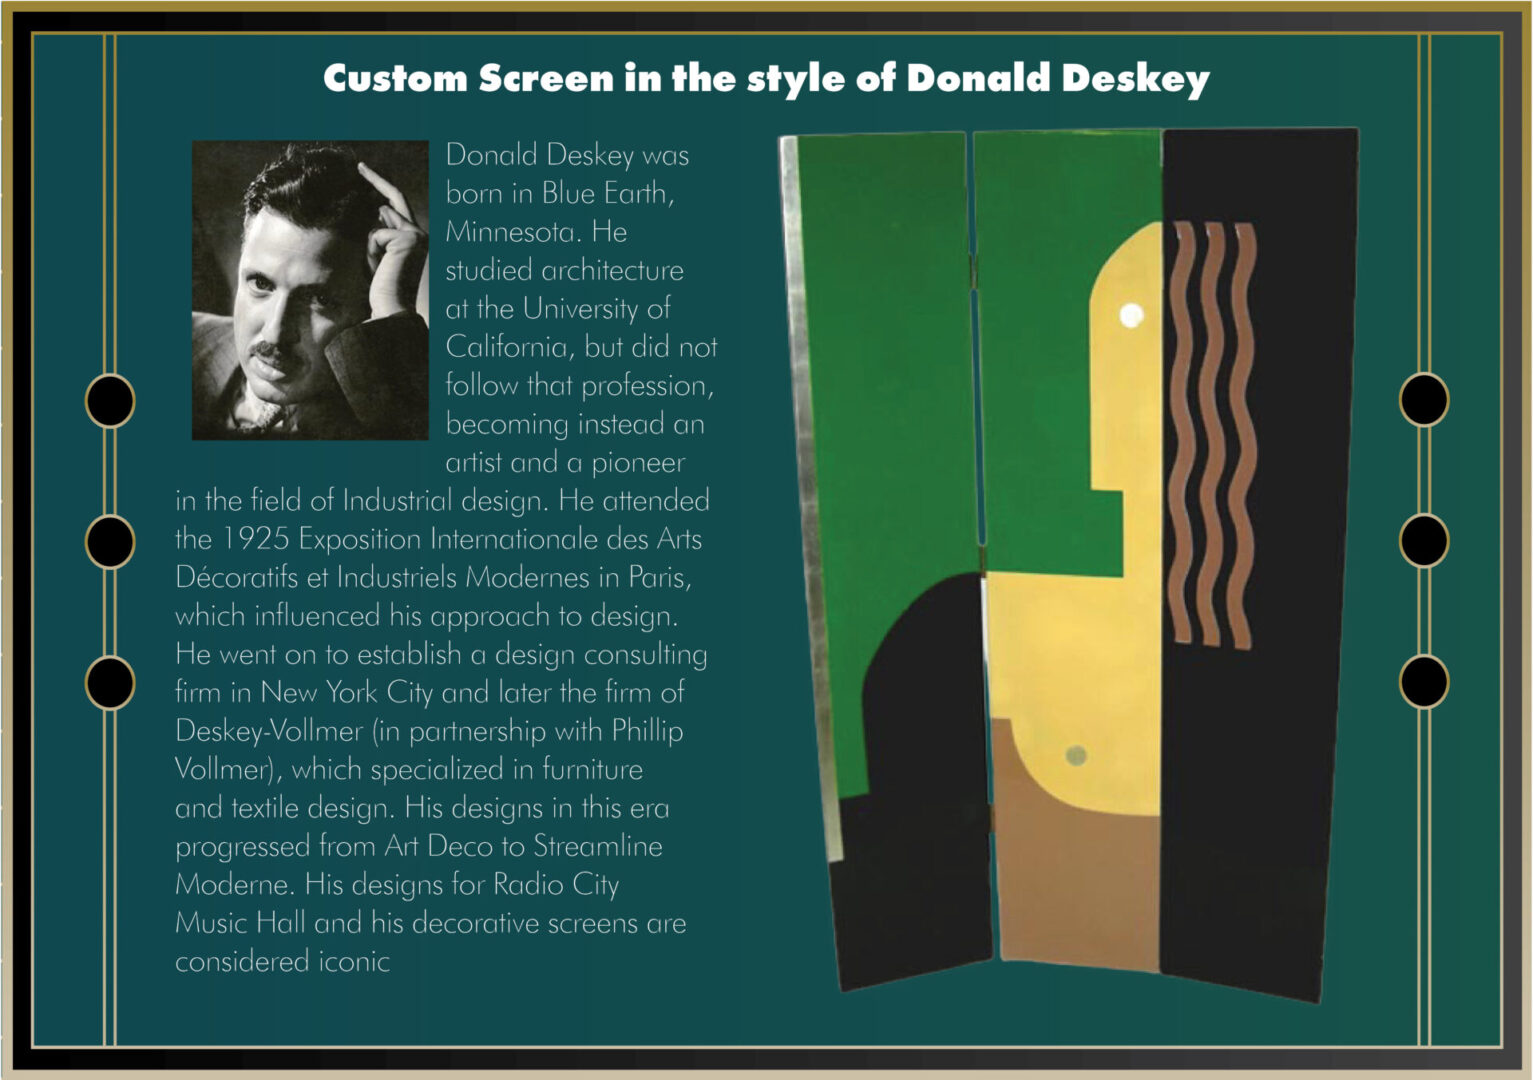 Donald Deskey inspired Custom Screen design